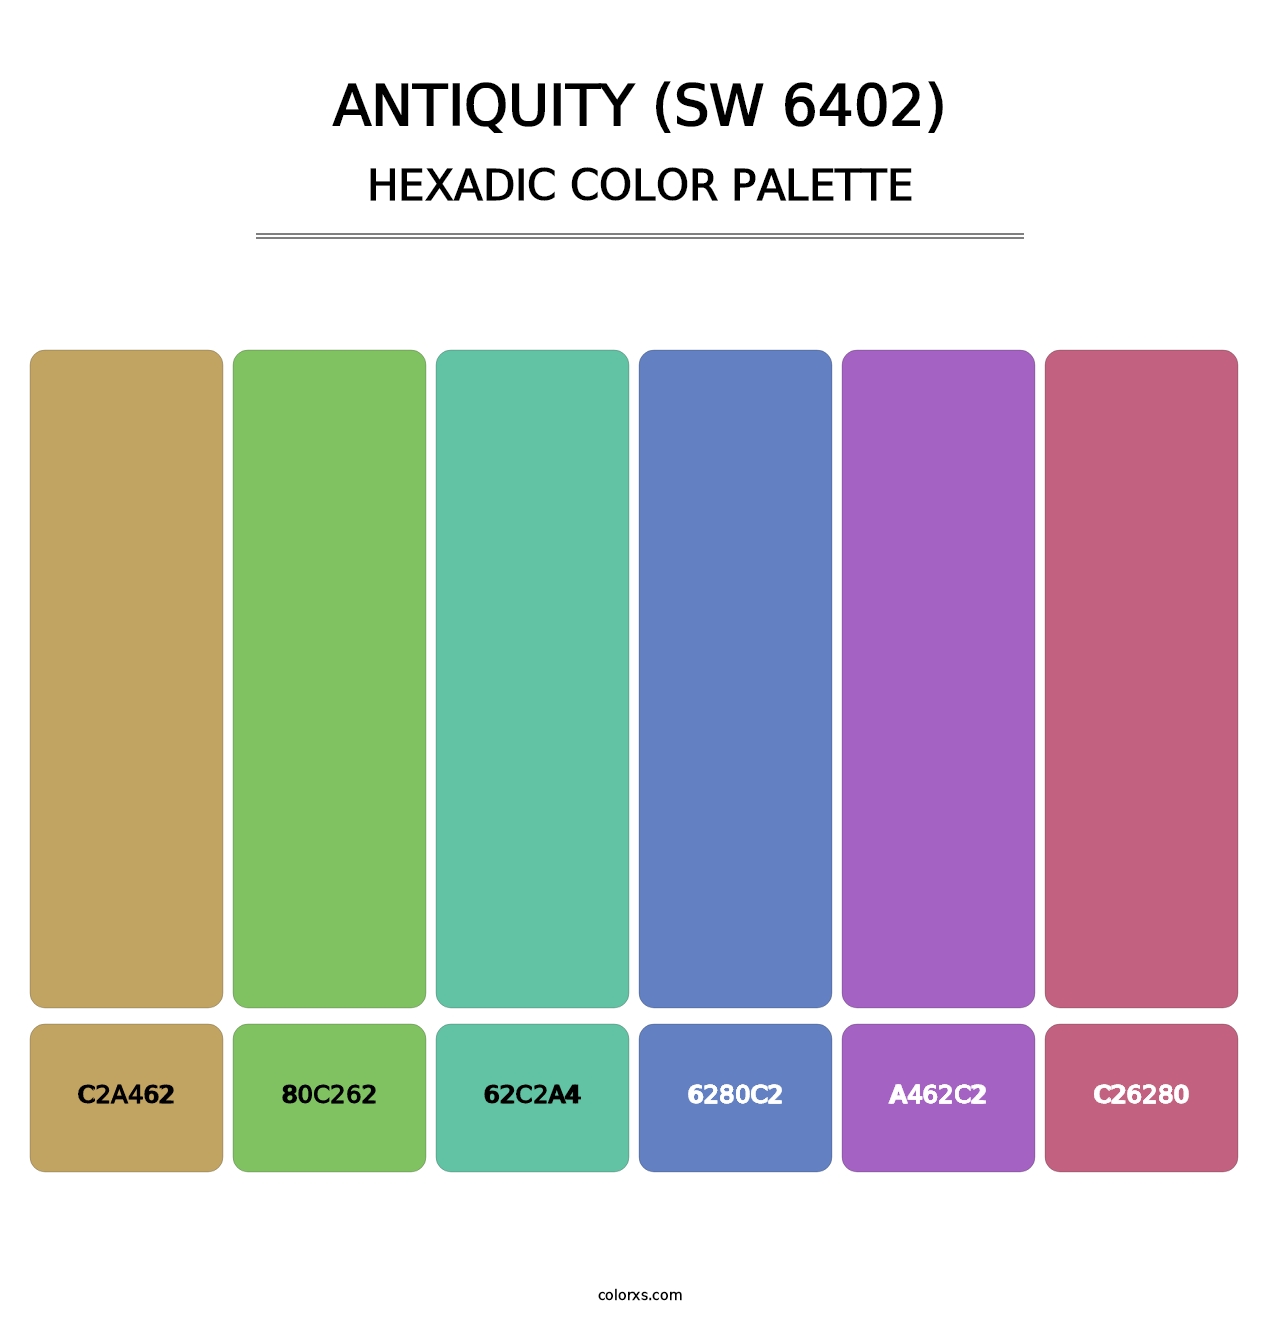 Antiquity (SW 6402) - Hexadic Color Palette